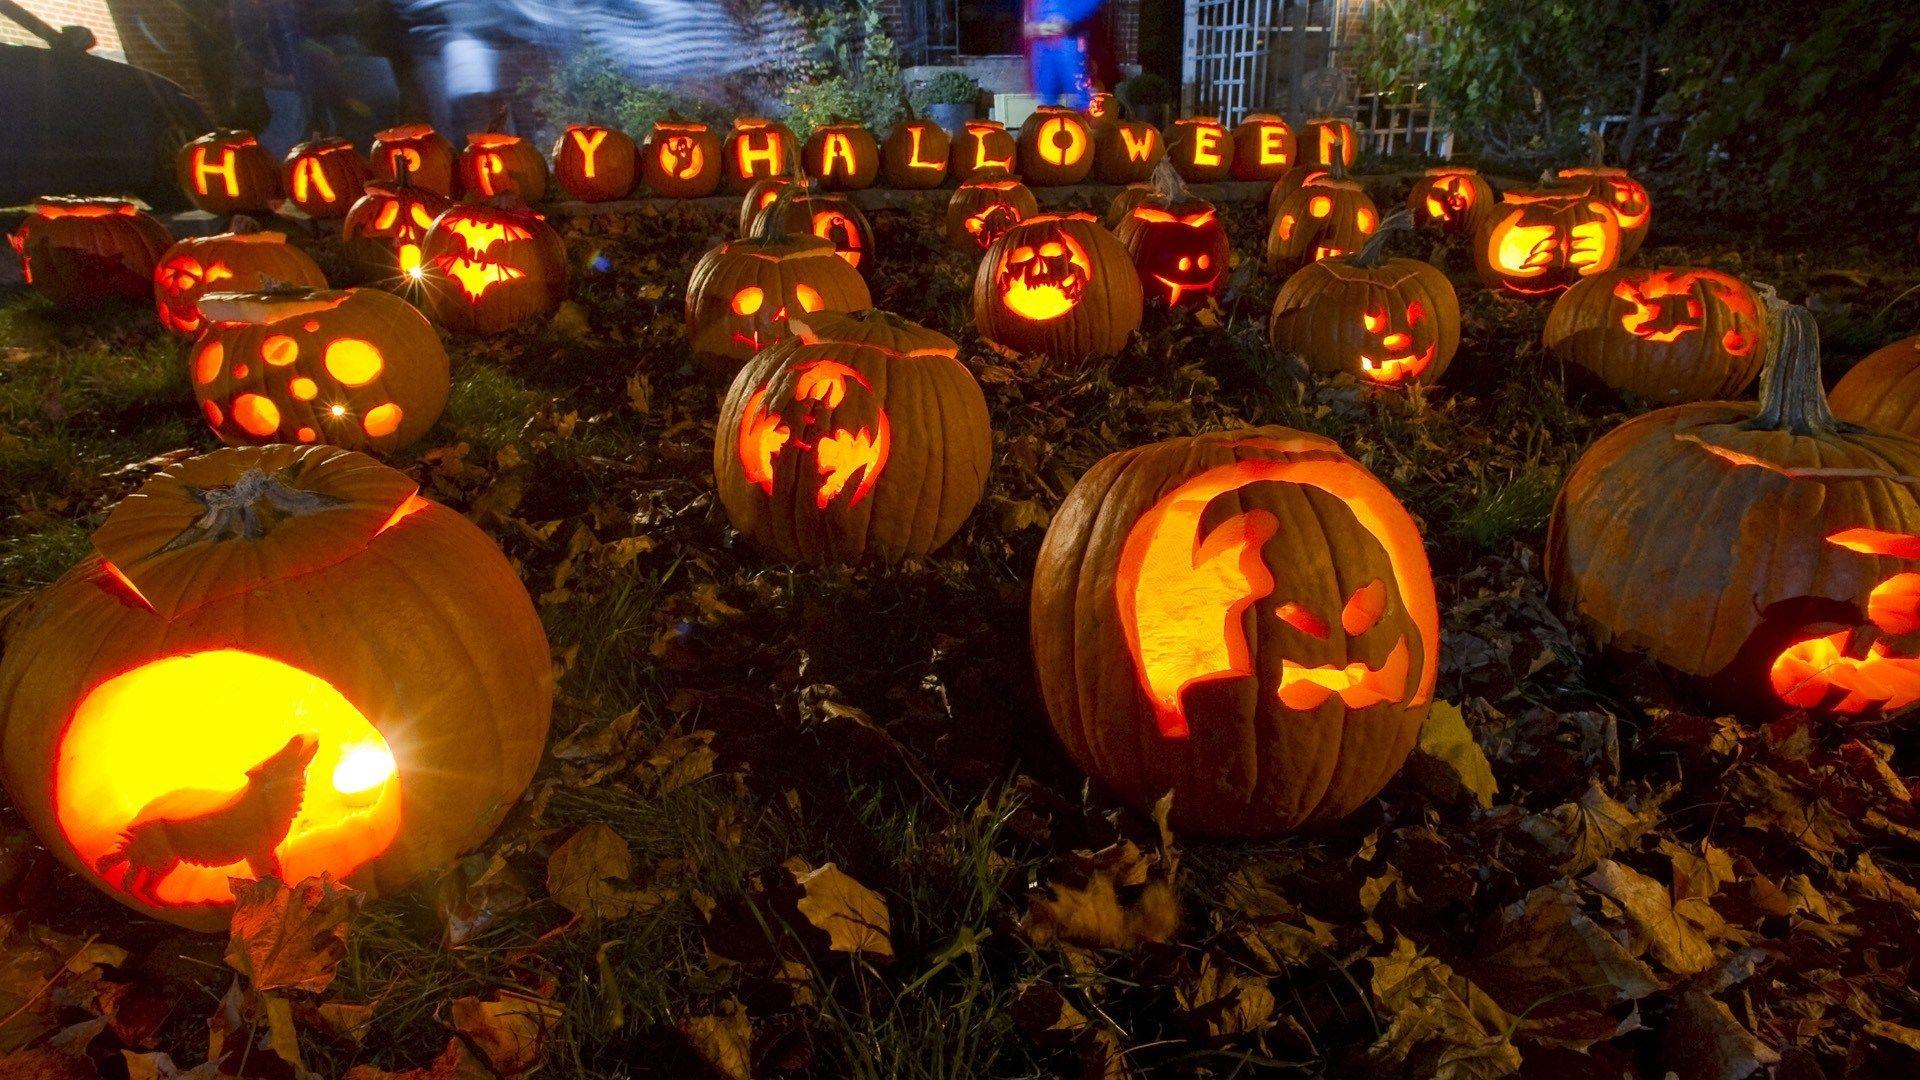 halloween HD wallpaper 1080p windows. Halloween wallpaper, Halloween pumpkin image, Halloween party night